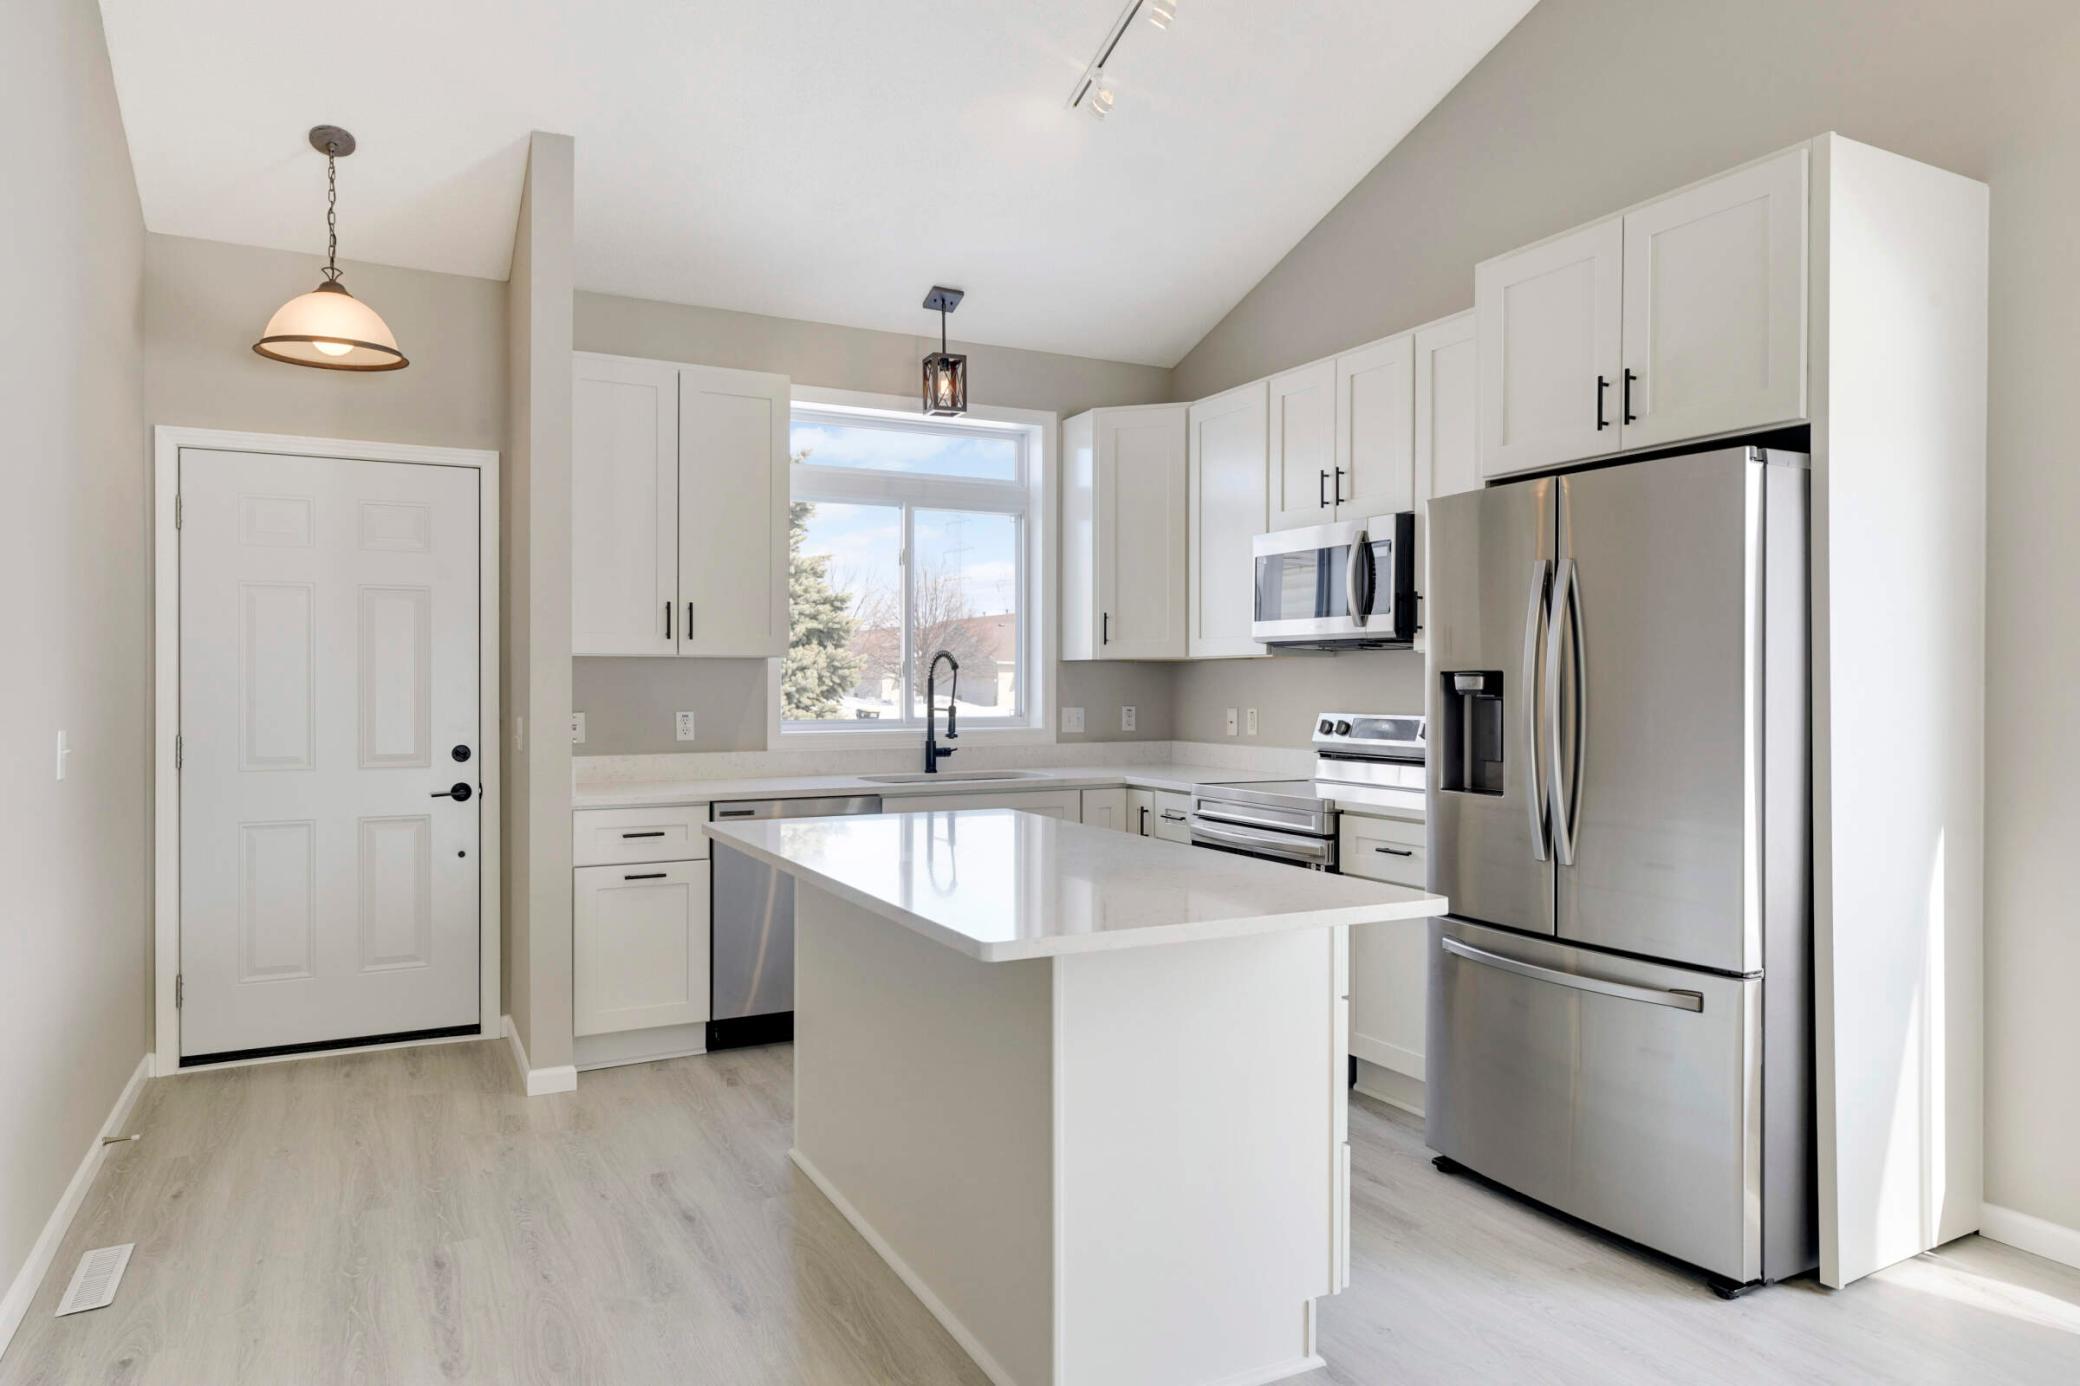 Elegant kitchen features white Shaker cabinets, quartz countertops and SS applainces